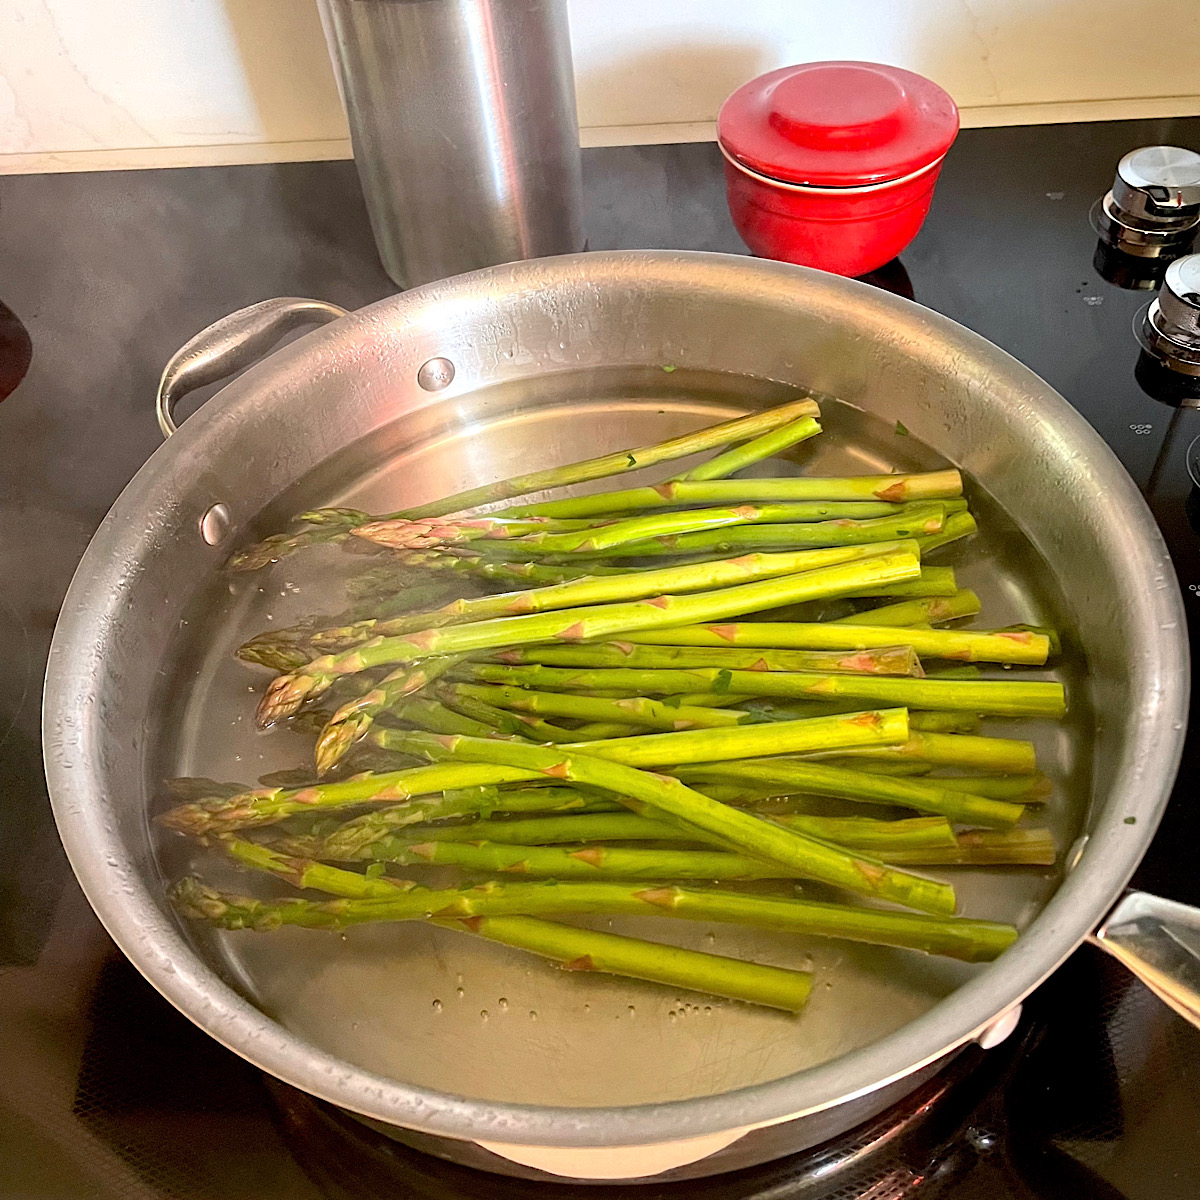 Asparagus spears parboiling in pan.